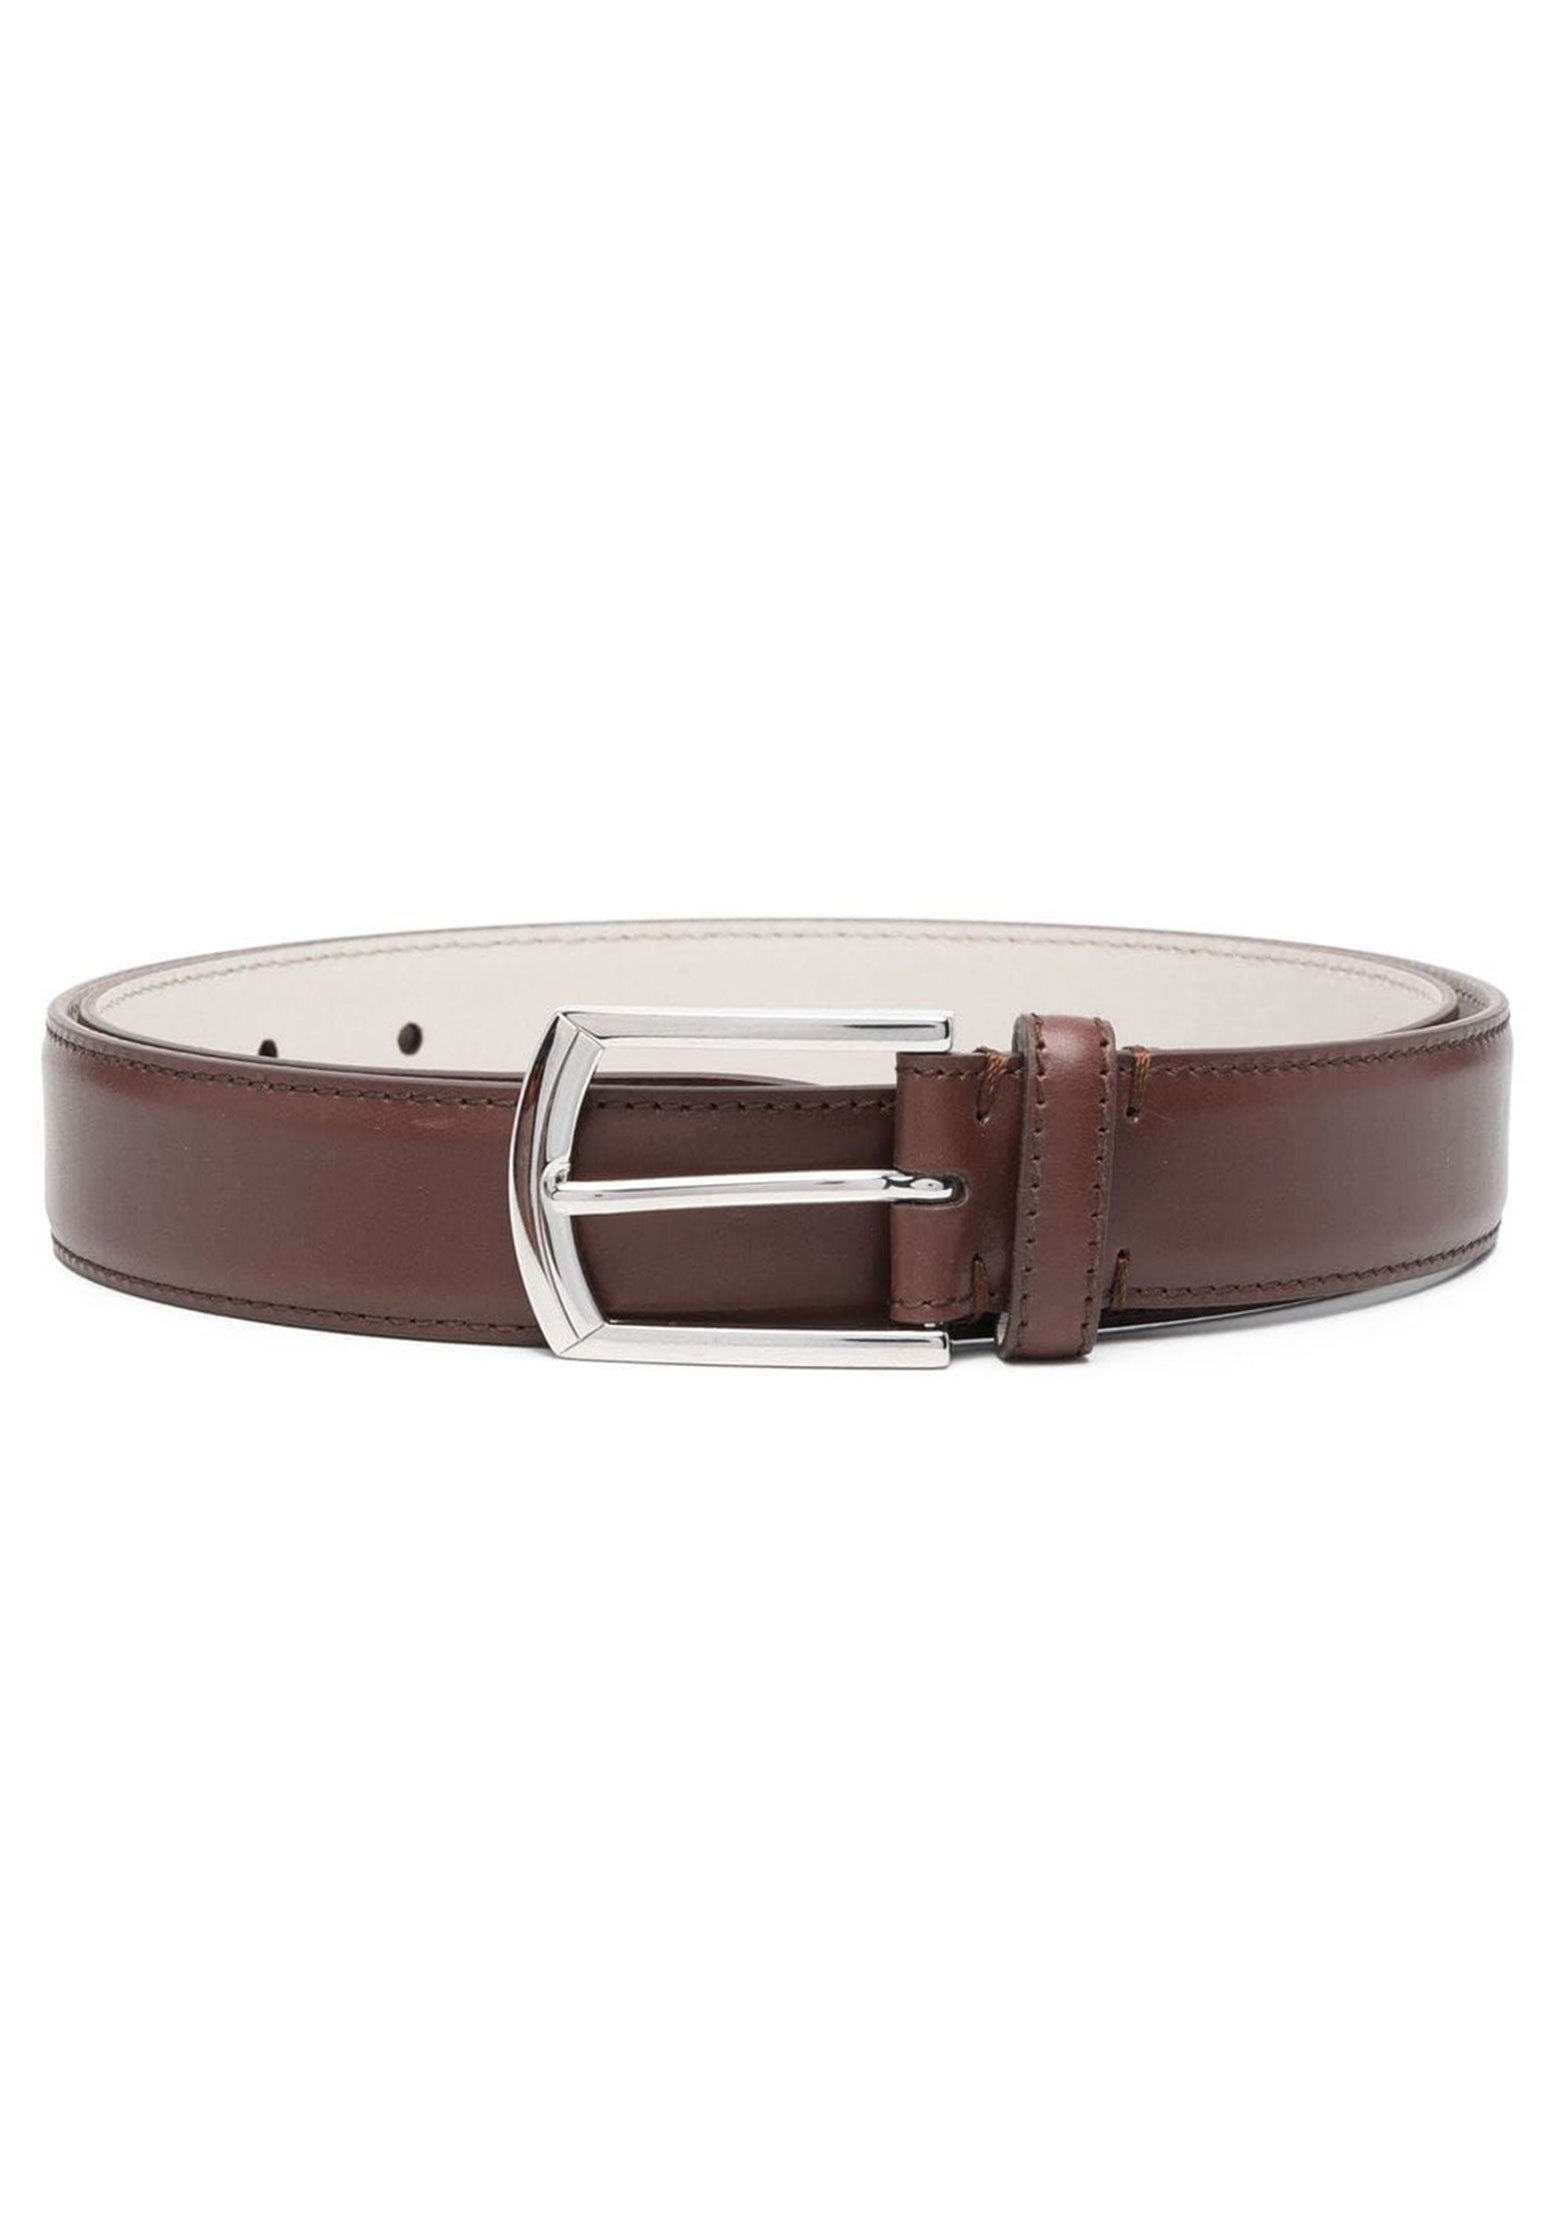 Belt BRUNELLO CUCINELLI Color: brown (Code: 1523) in online store Allure